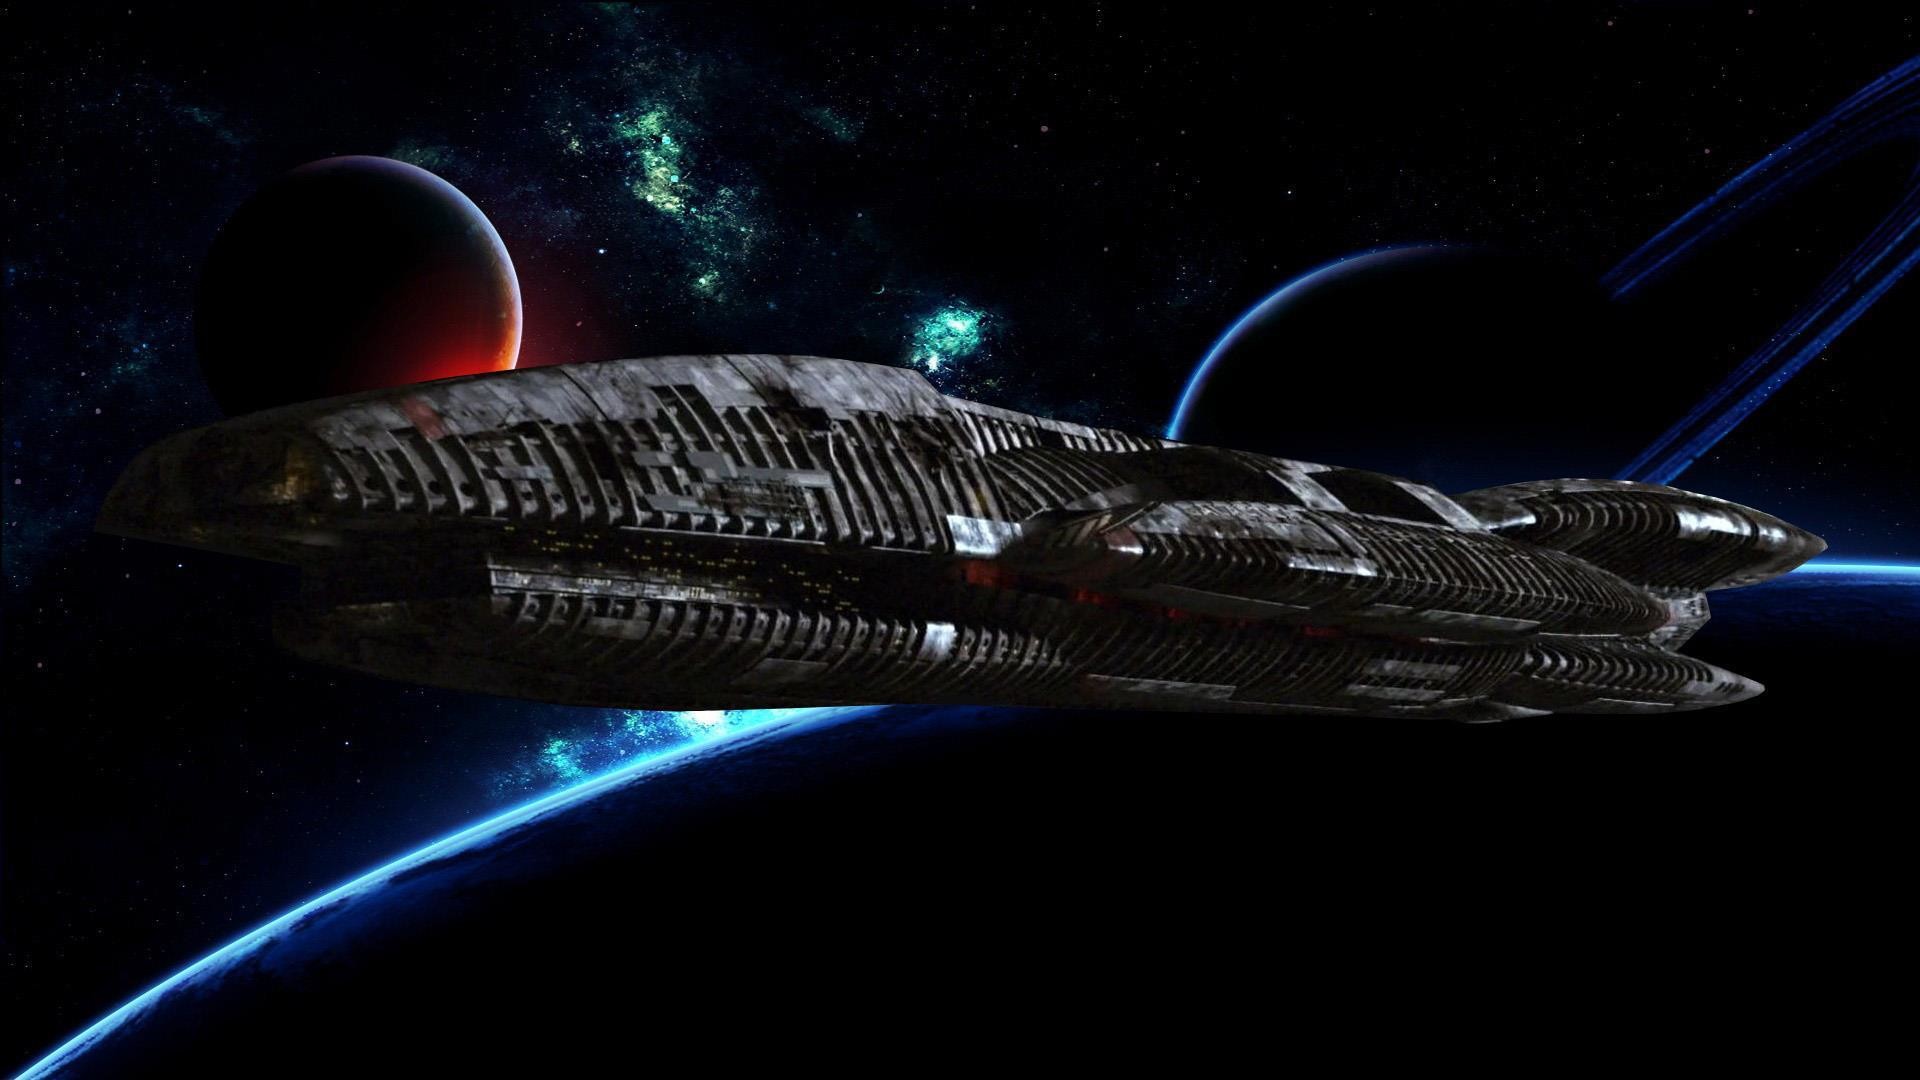 Battlestar Galactica Wallpaper Image